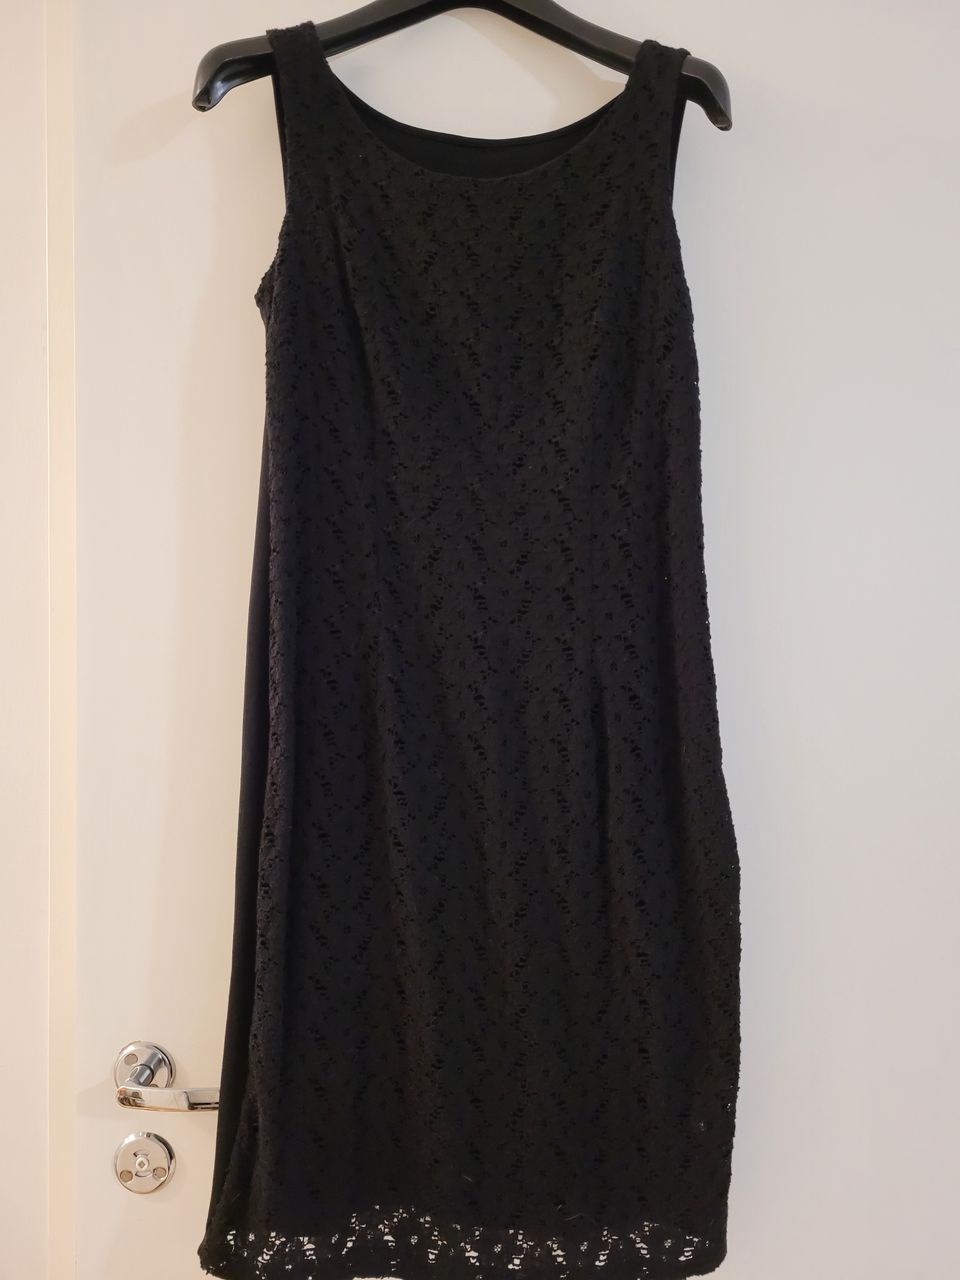 Musta hiaton mekko koko 36